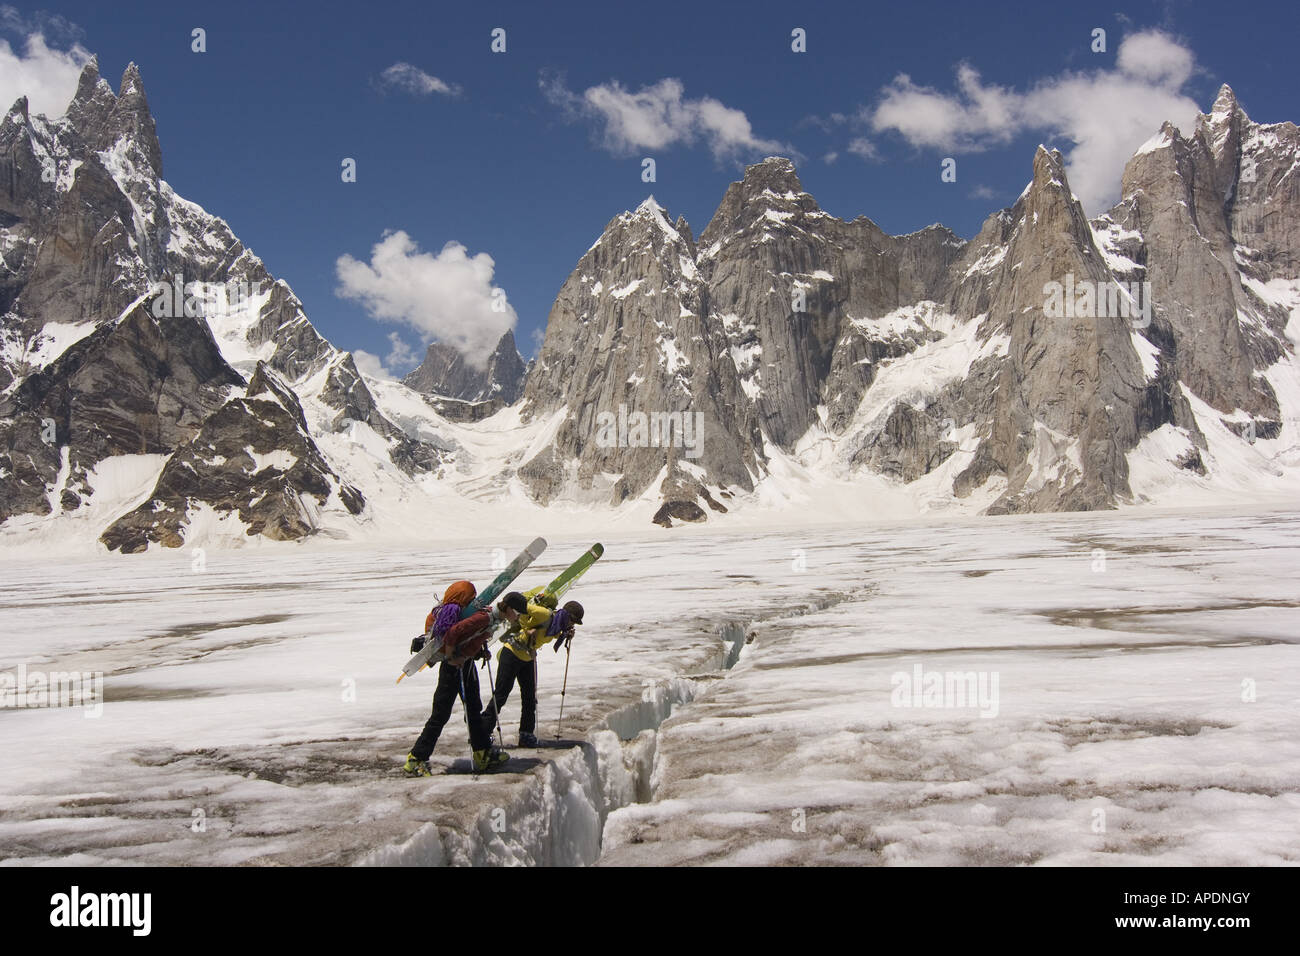 Two women ski mountaineers looking into a crevasse on the Biafo glacier in the Karakoram mountains of Pakistan Stock Photo